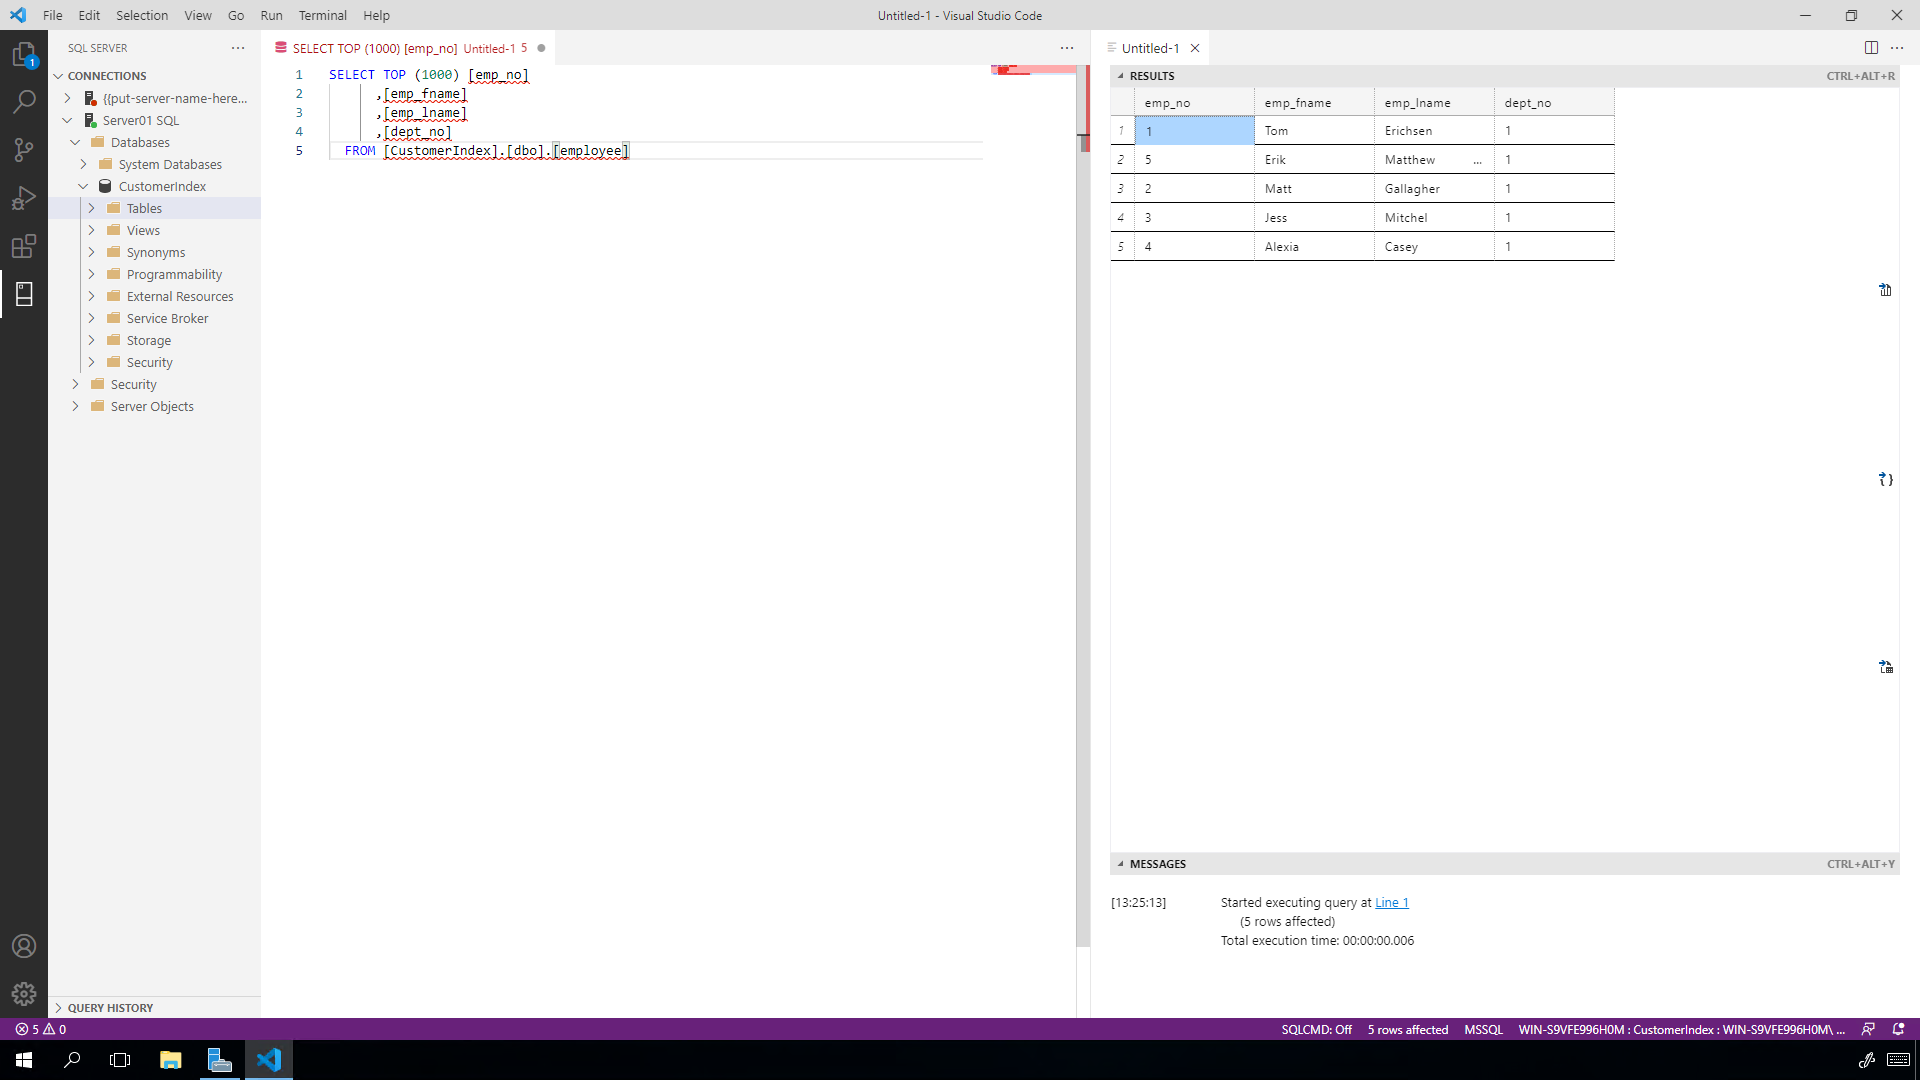 Visual Studio Code performing SQL queries